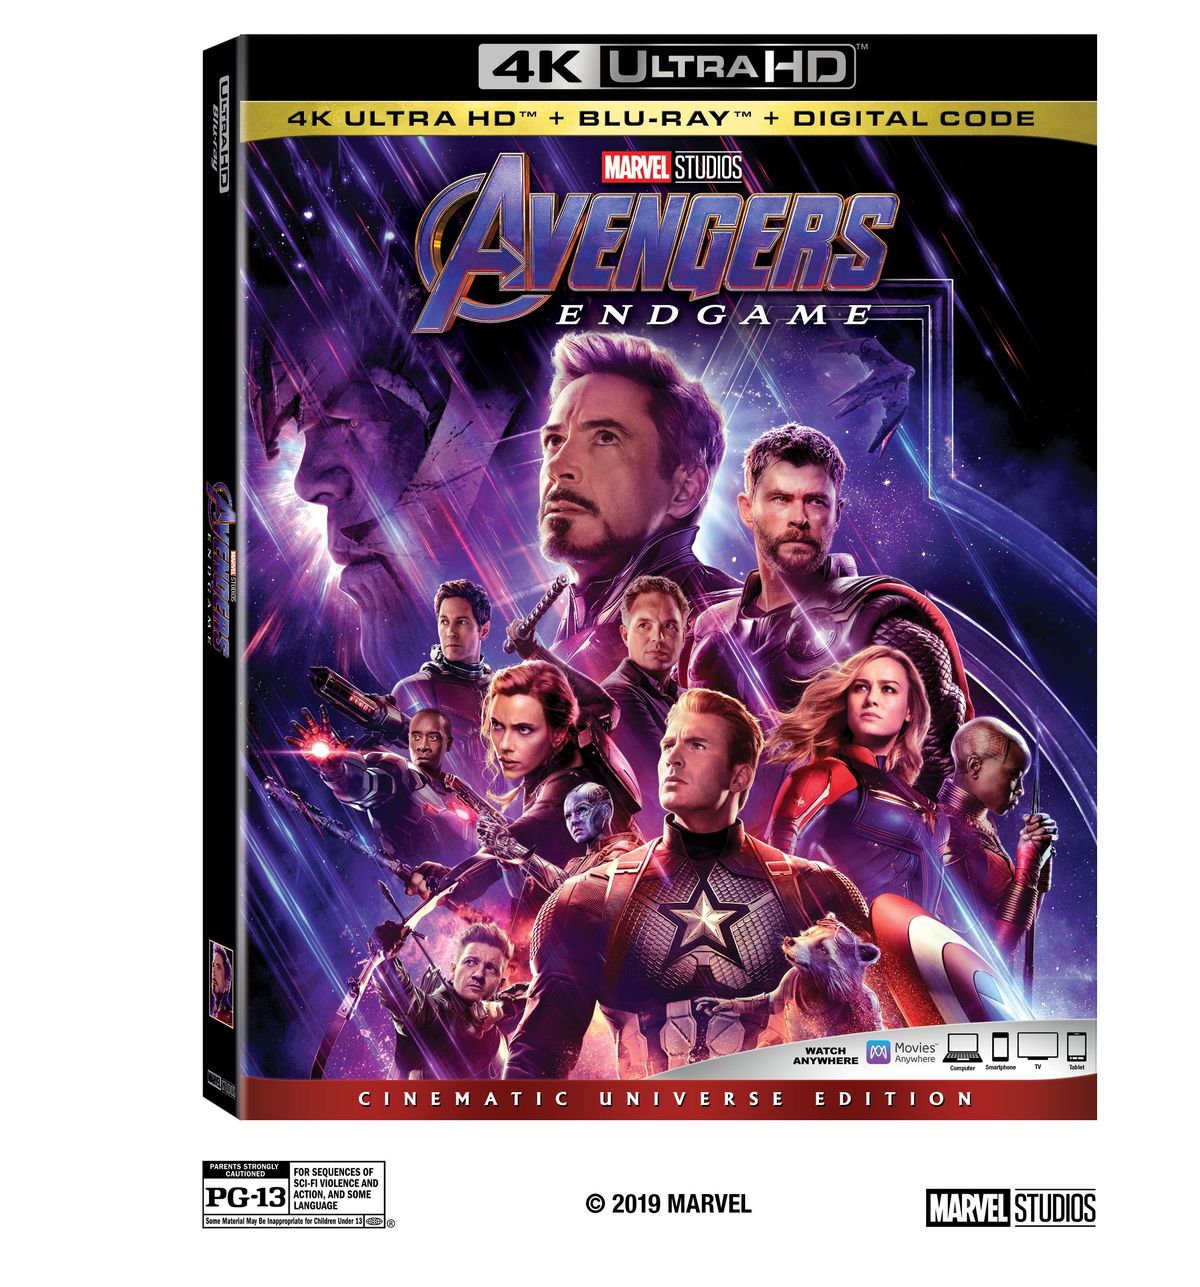 Avengers: Endgame Home Video Release Ημερομηνίες, Ανακοινώθηκαν τα ειδικά χαρακτηριστικά